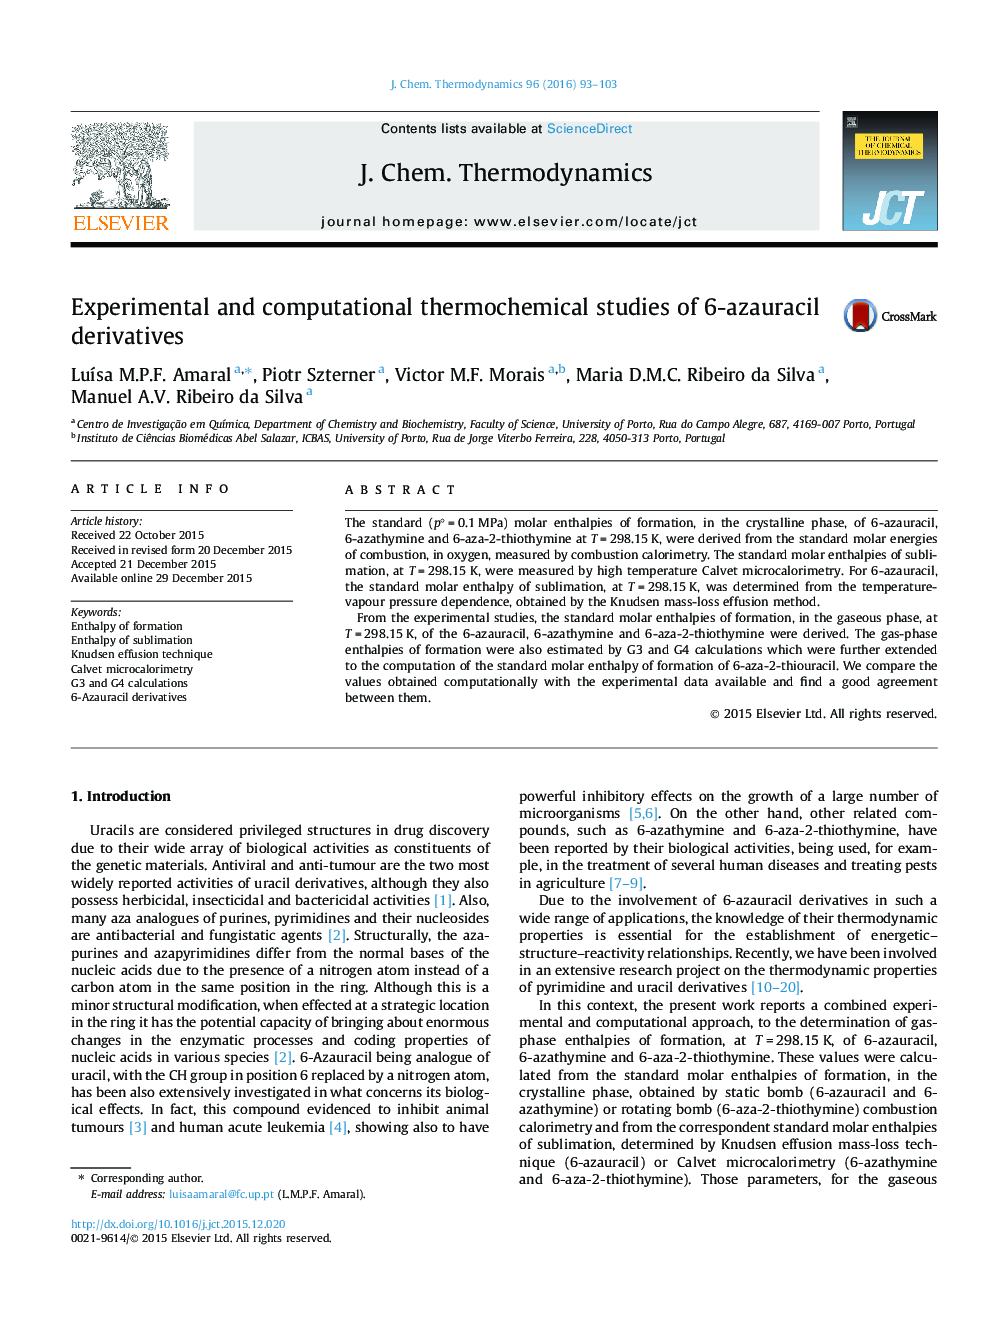 Experimental and computational thermochemical studies of 6-azauracil derivatives